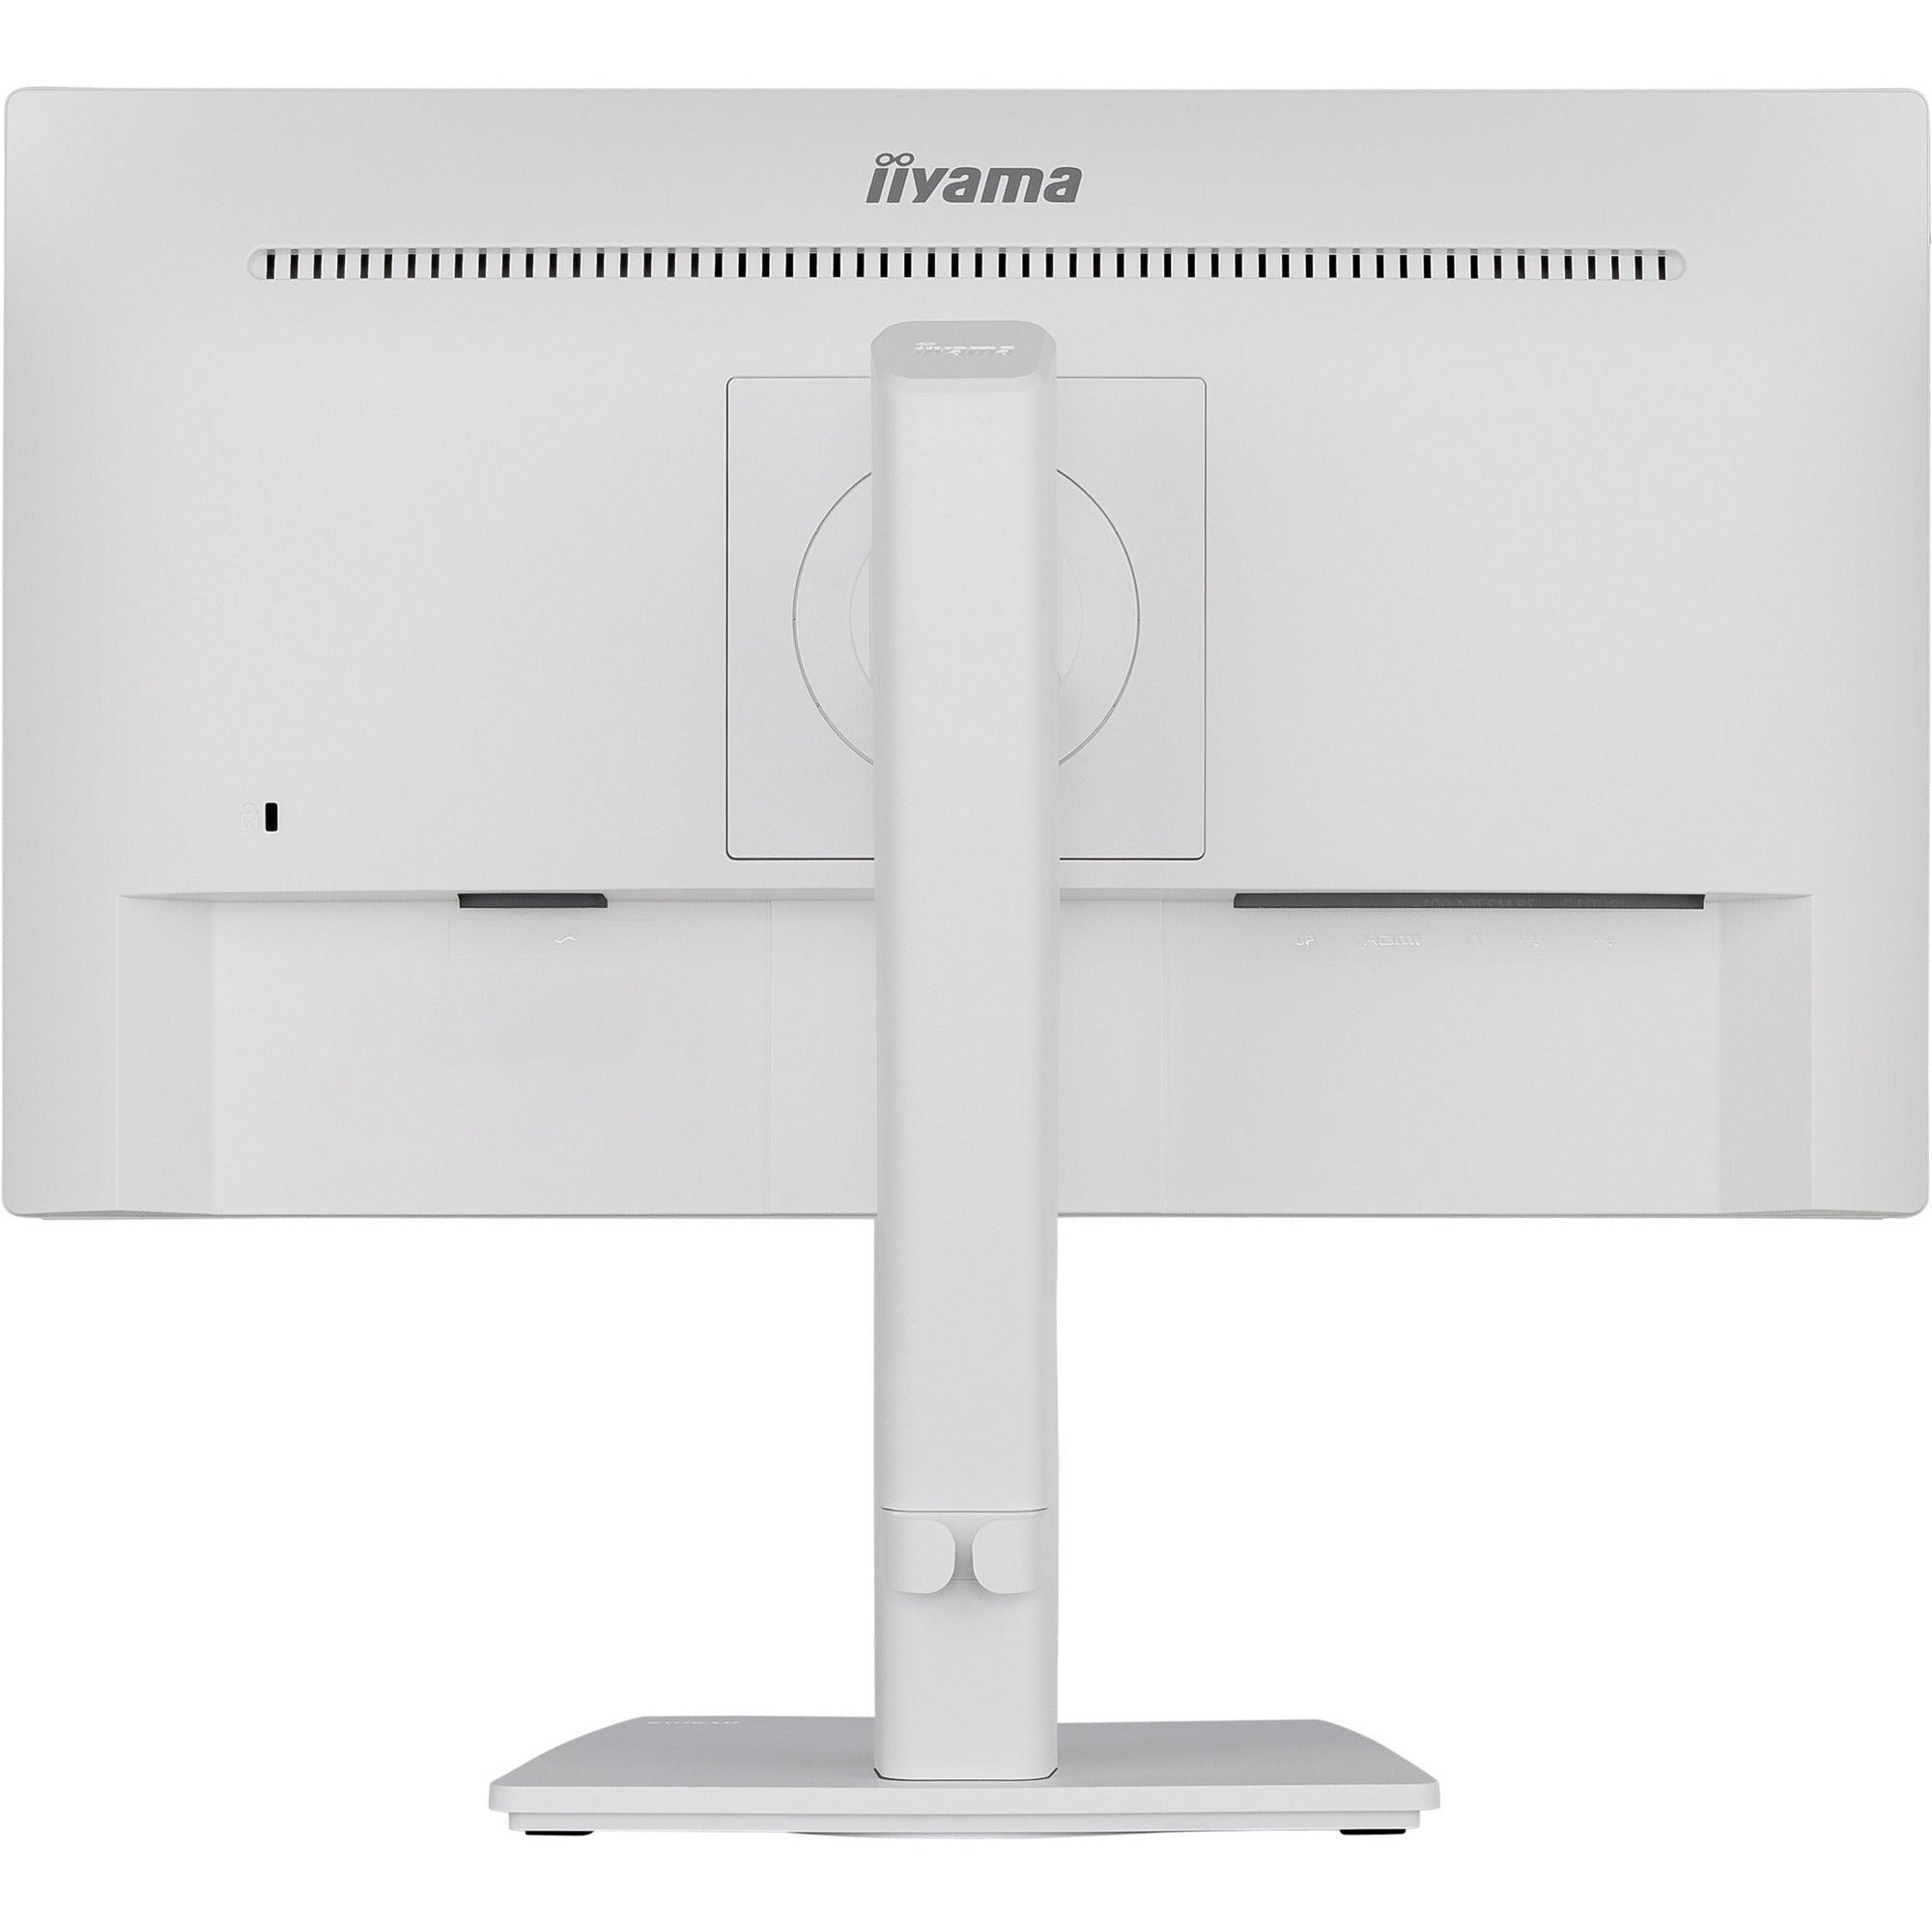 iiyama ProLite XUB2294HSU-W2 22" LCD HD Monitor in White